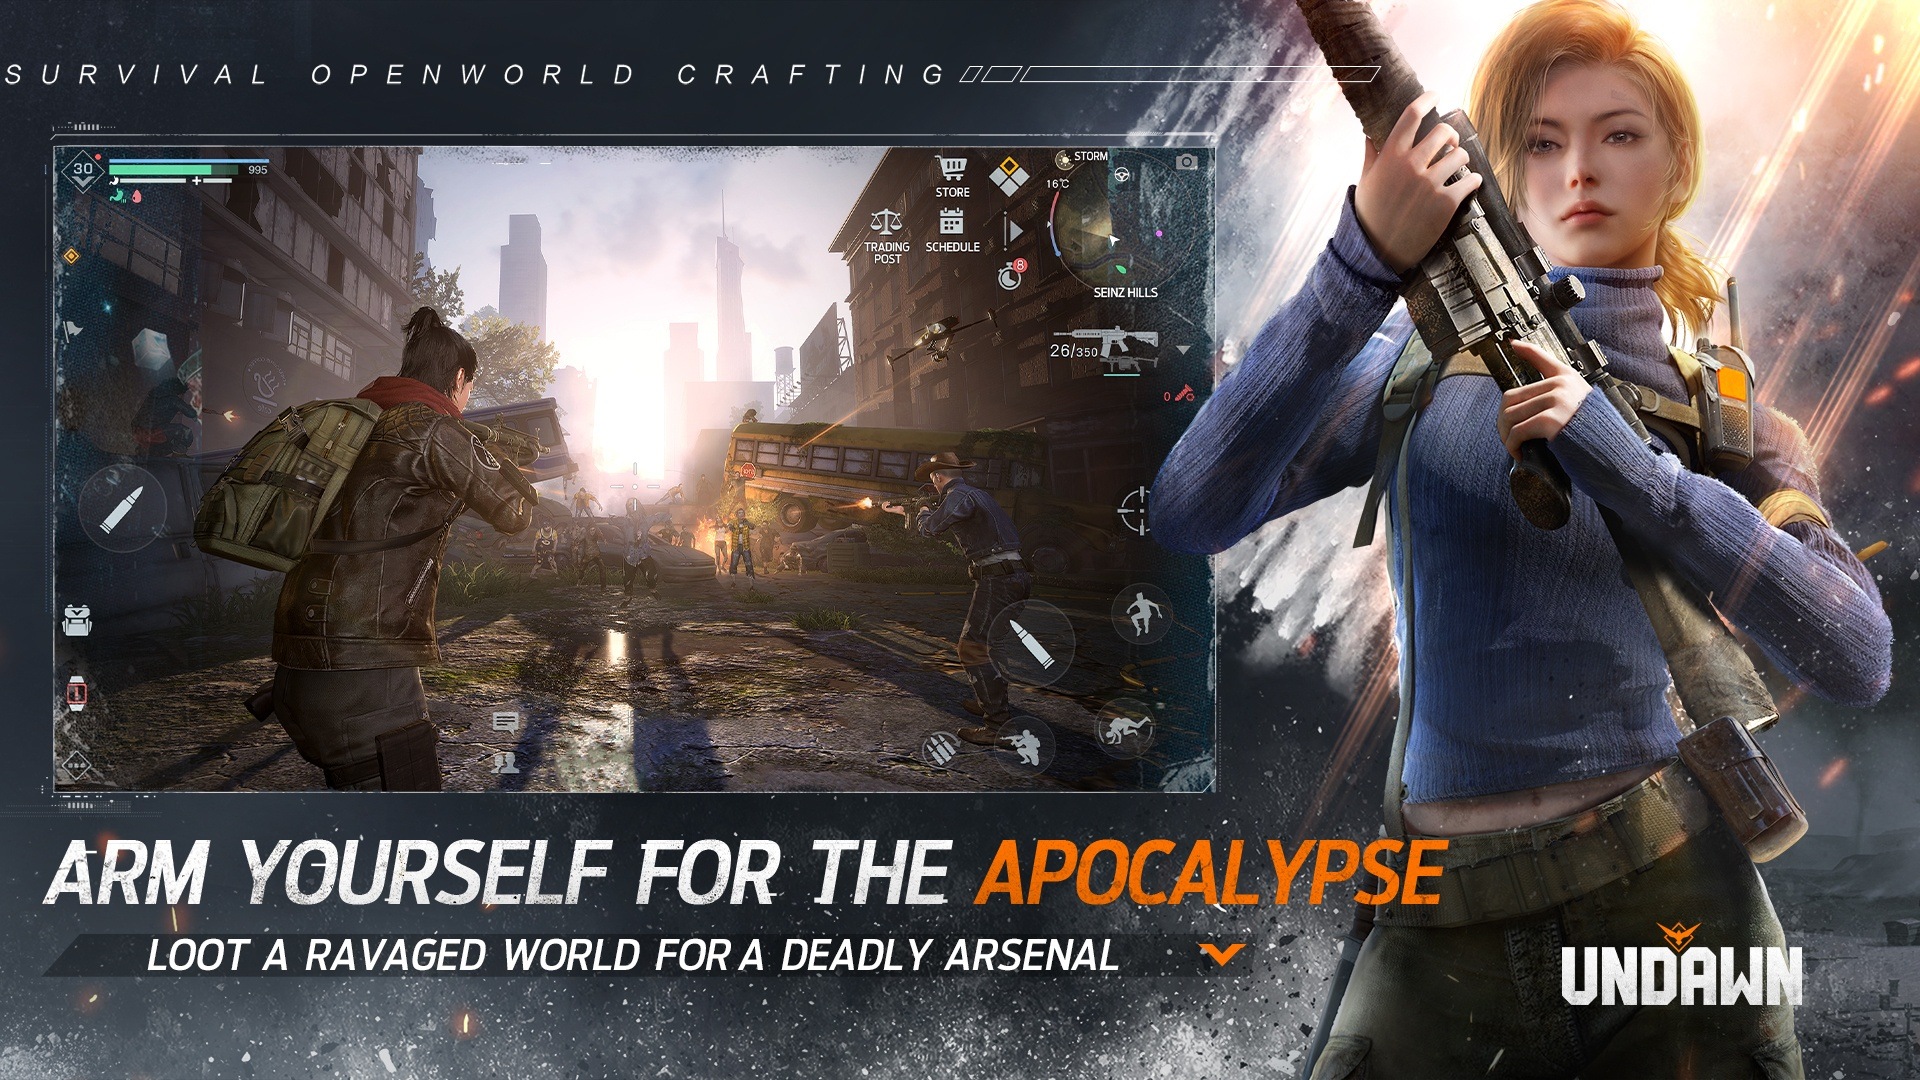 Undawn: jogo pós-apocalíptico com Will Smith chega para PC